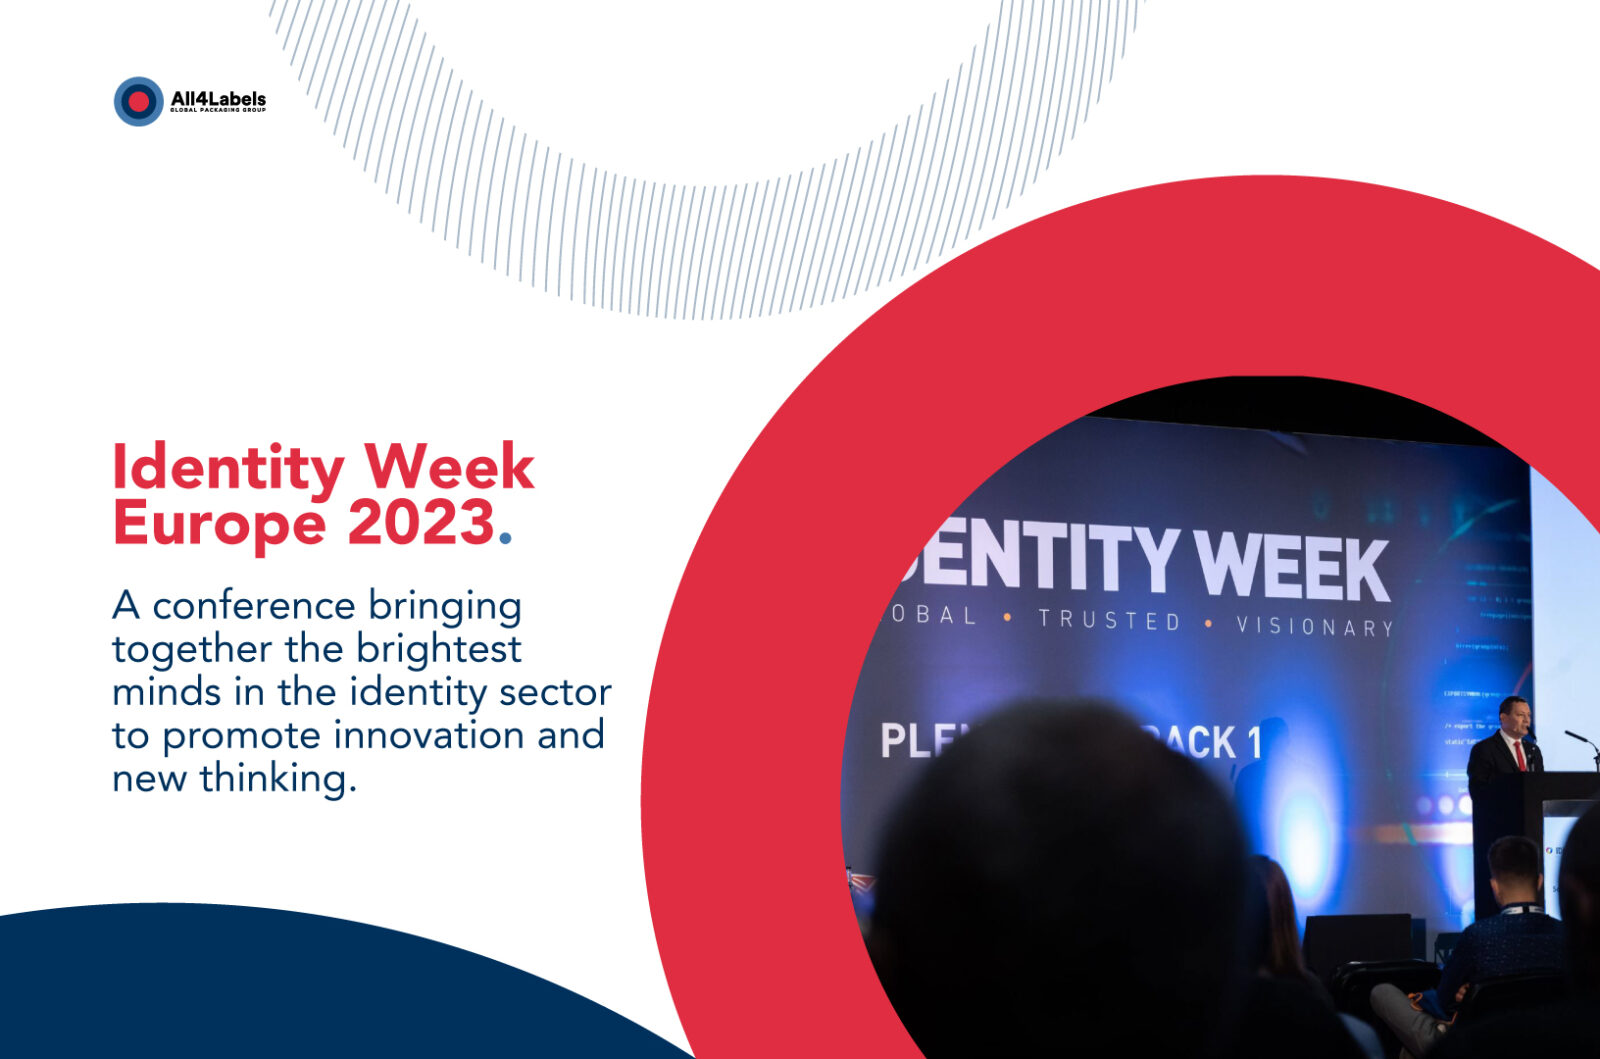 Identity Week Europe 2023 All4Labels Global Packaging Group